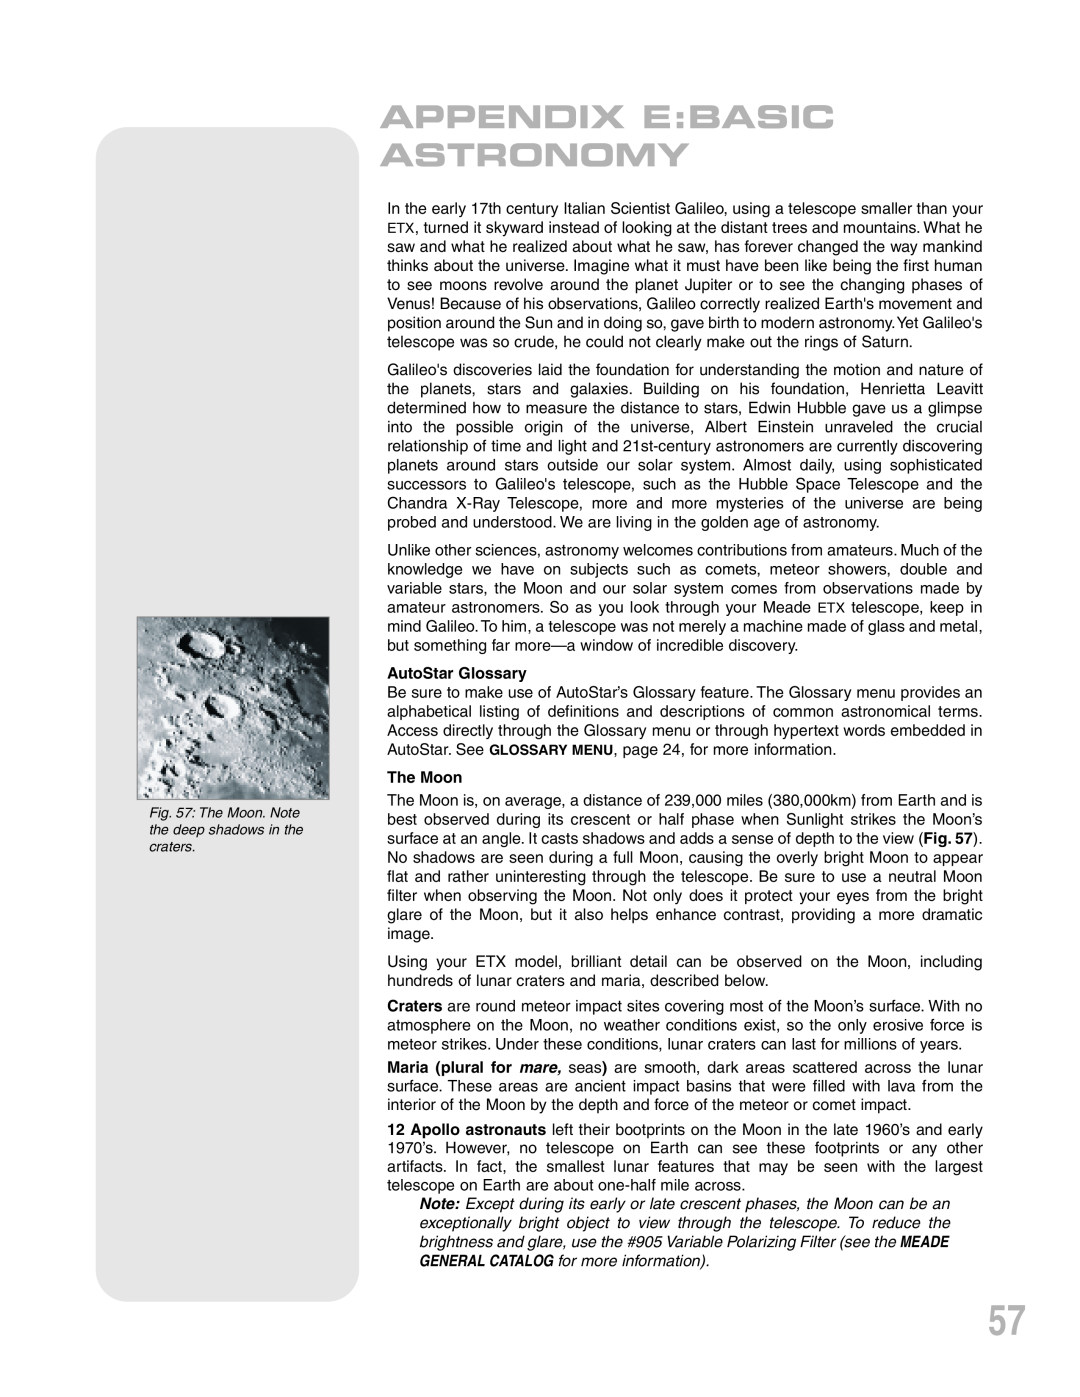 Meade ETX-90PE instruction manual Appendix Ebasic Astronomy, AutoStar Glossary, The Moon 